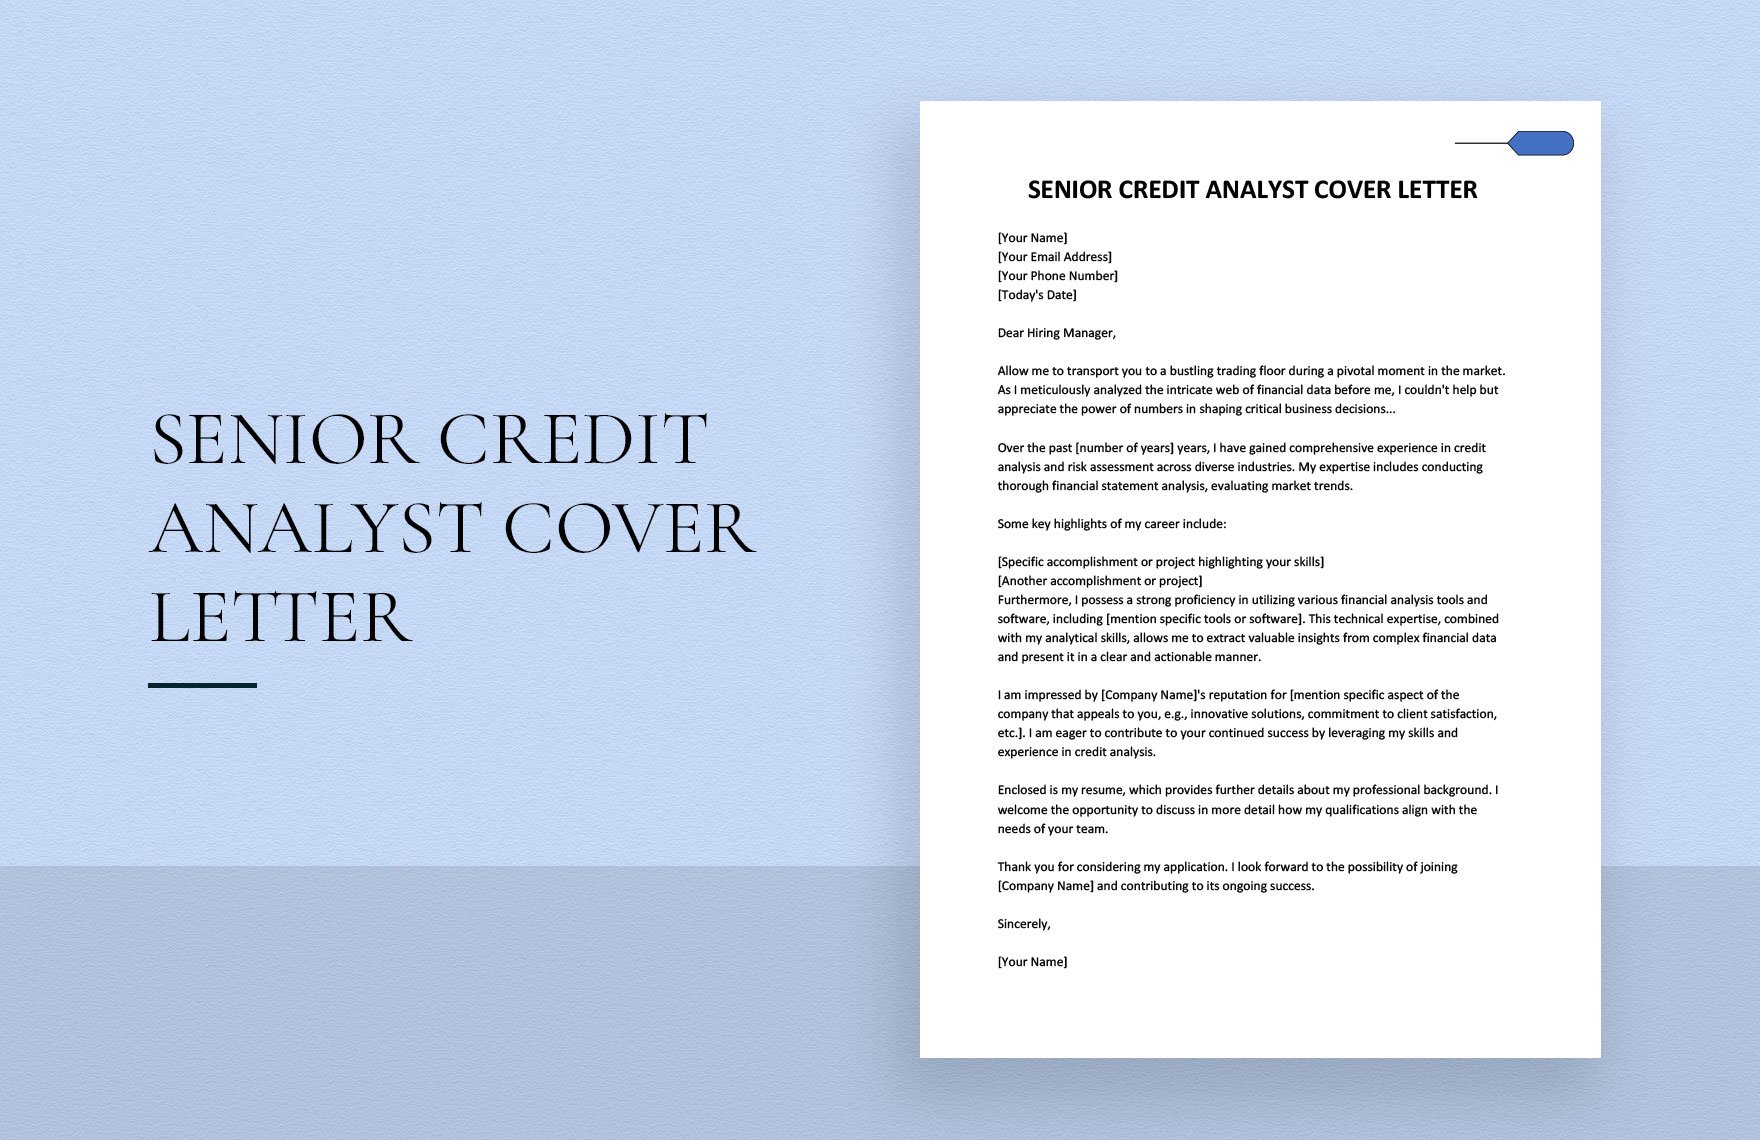 Senior Credit Analyst Cover Letter